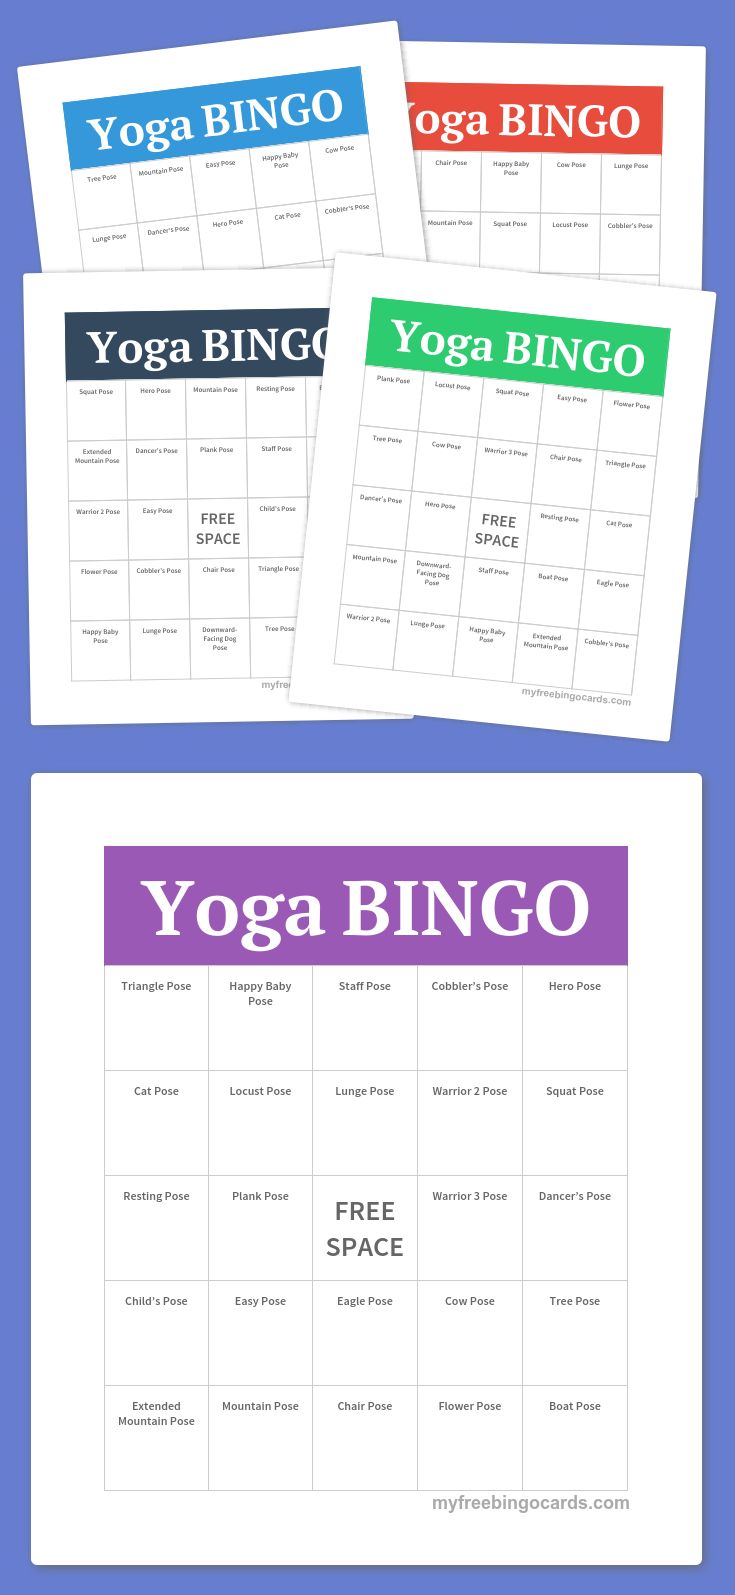 Make your own free bingo cards at myfreebingocards.com